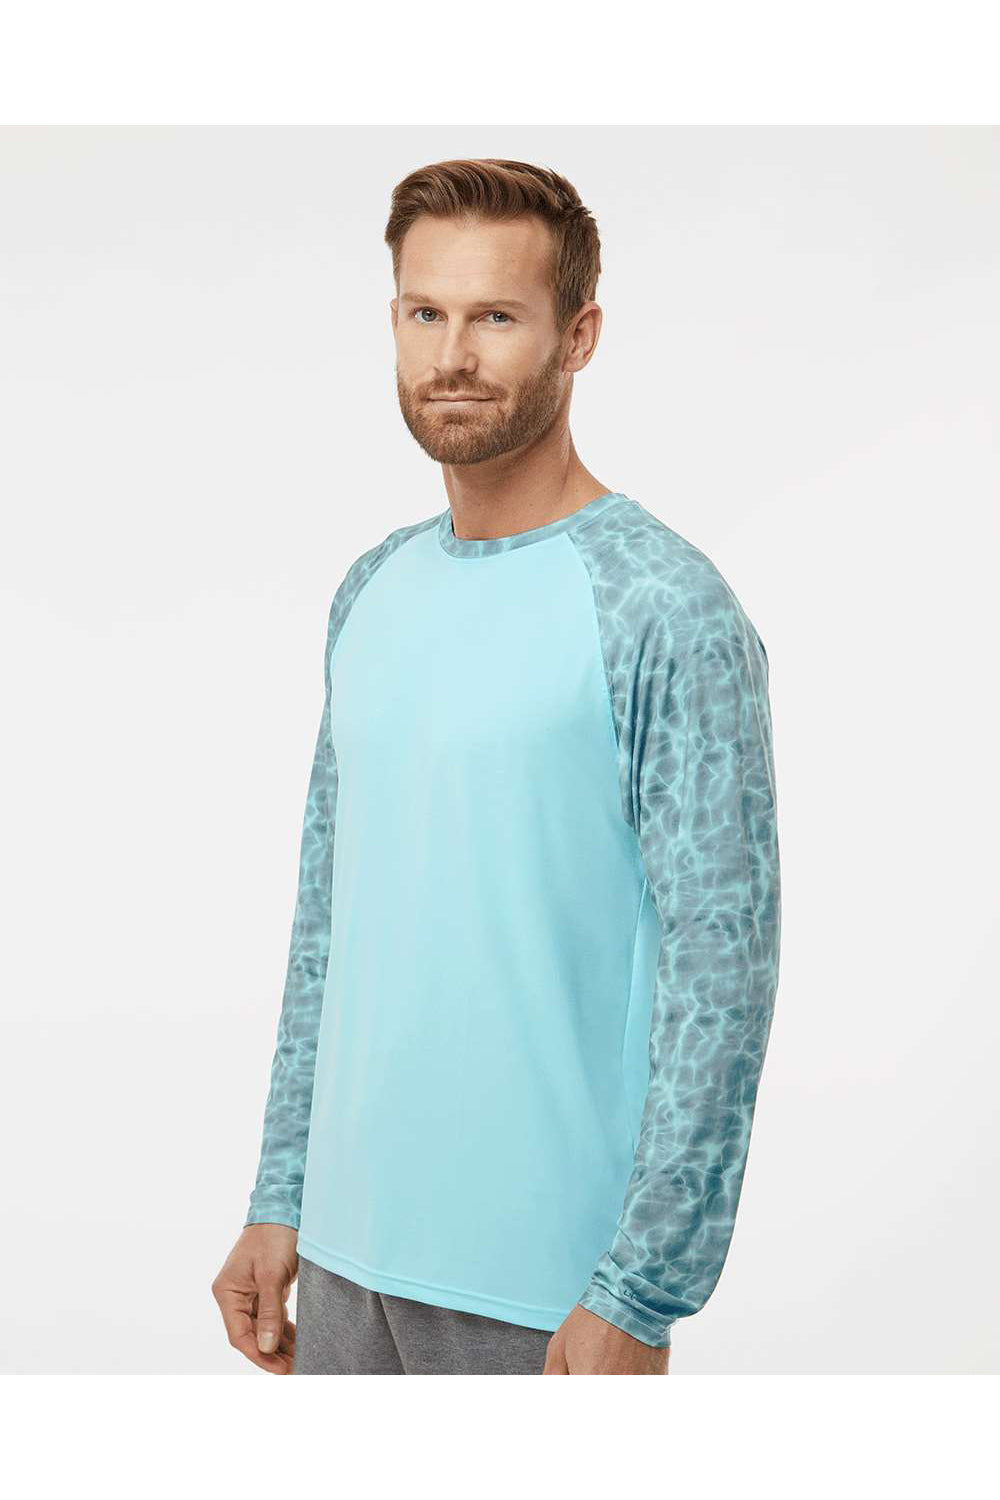 Paragon 231 Mens Panama Colorblocked Long Sleeve Crewneck T-Shirt Grey Aqua Water Model Side